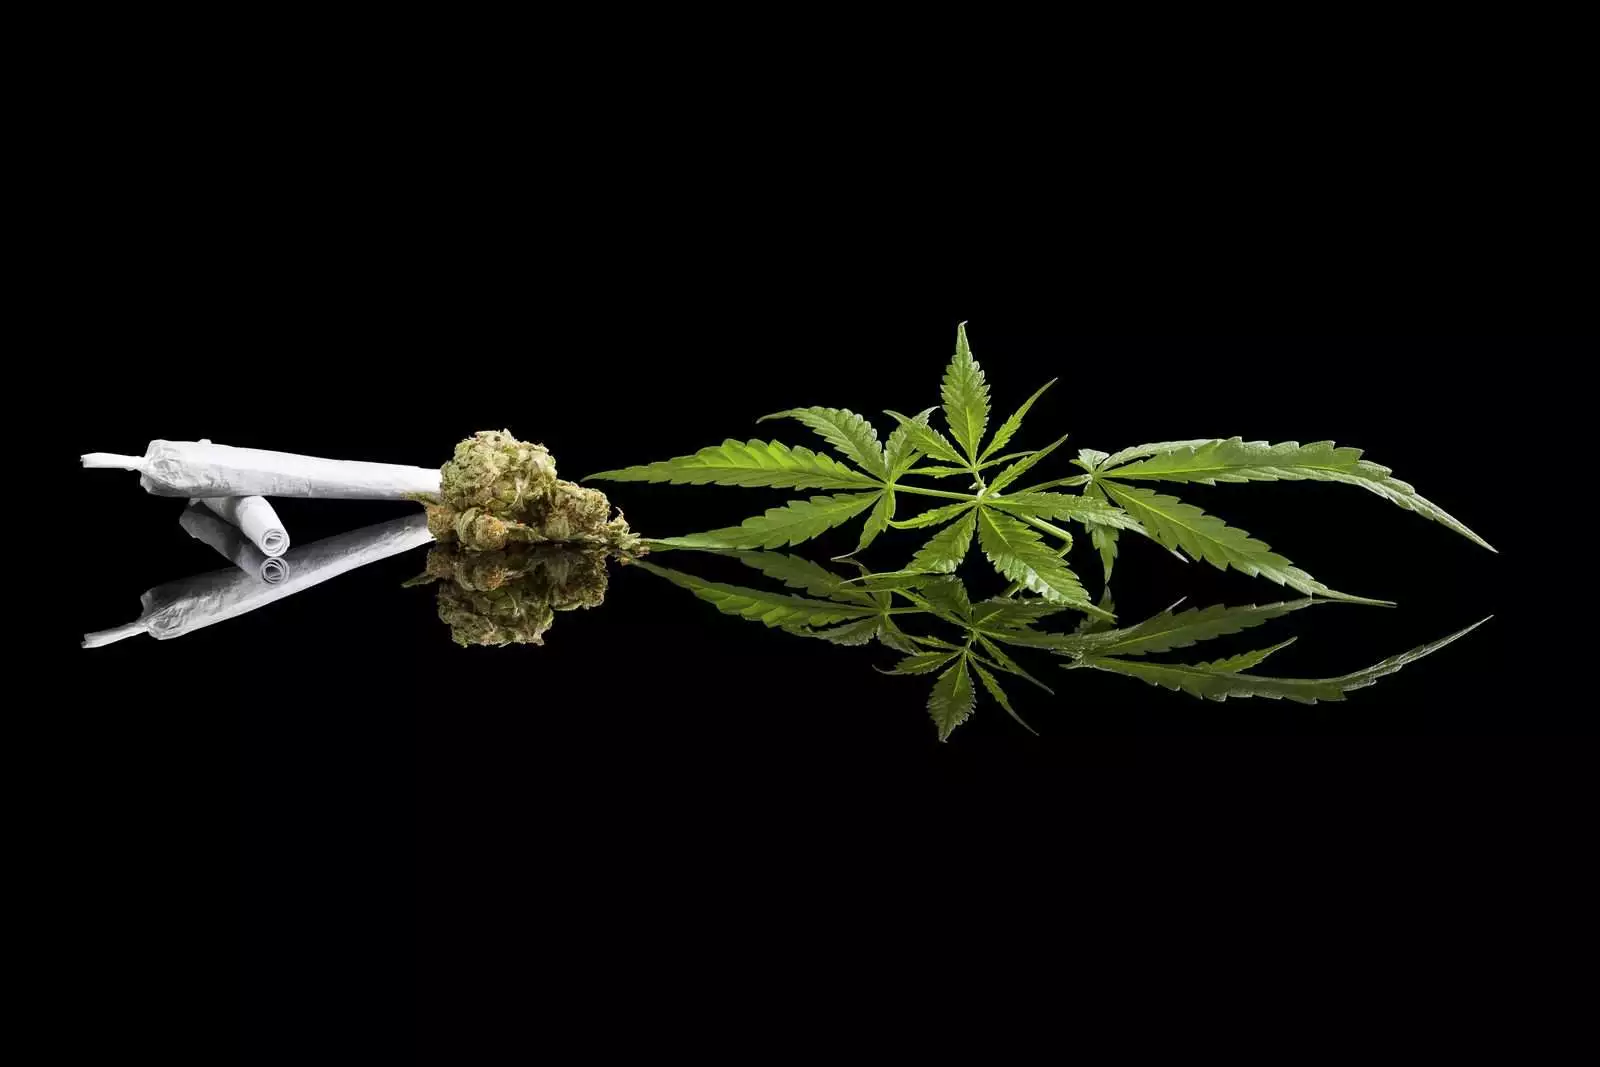 Marijuana background. Cannabis cigarette joint, bud and hemp leaves isolated on black background. Addictive drug or alternative medicine.